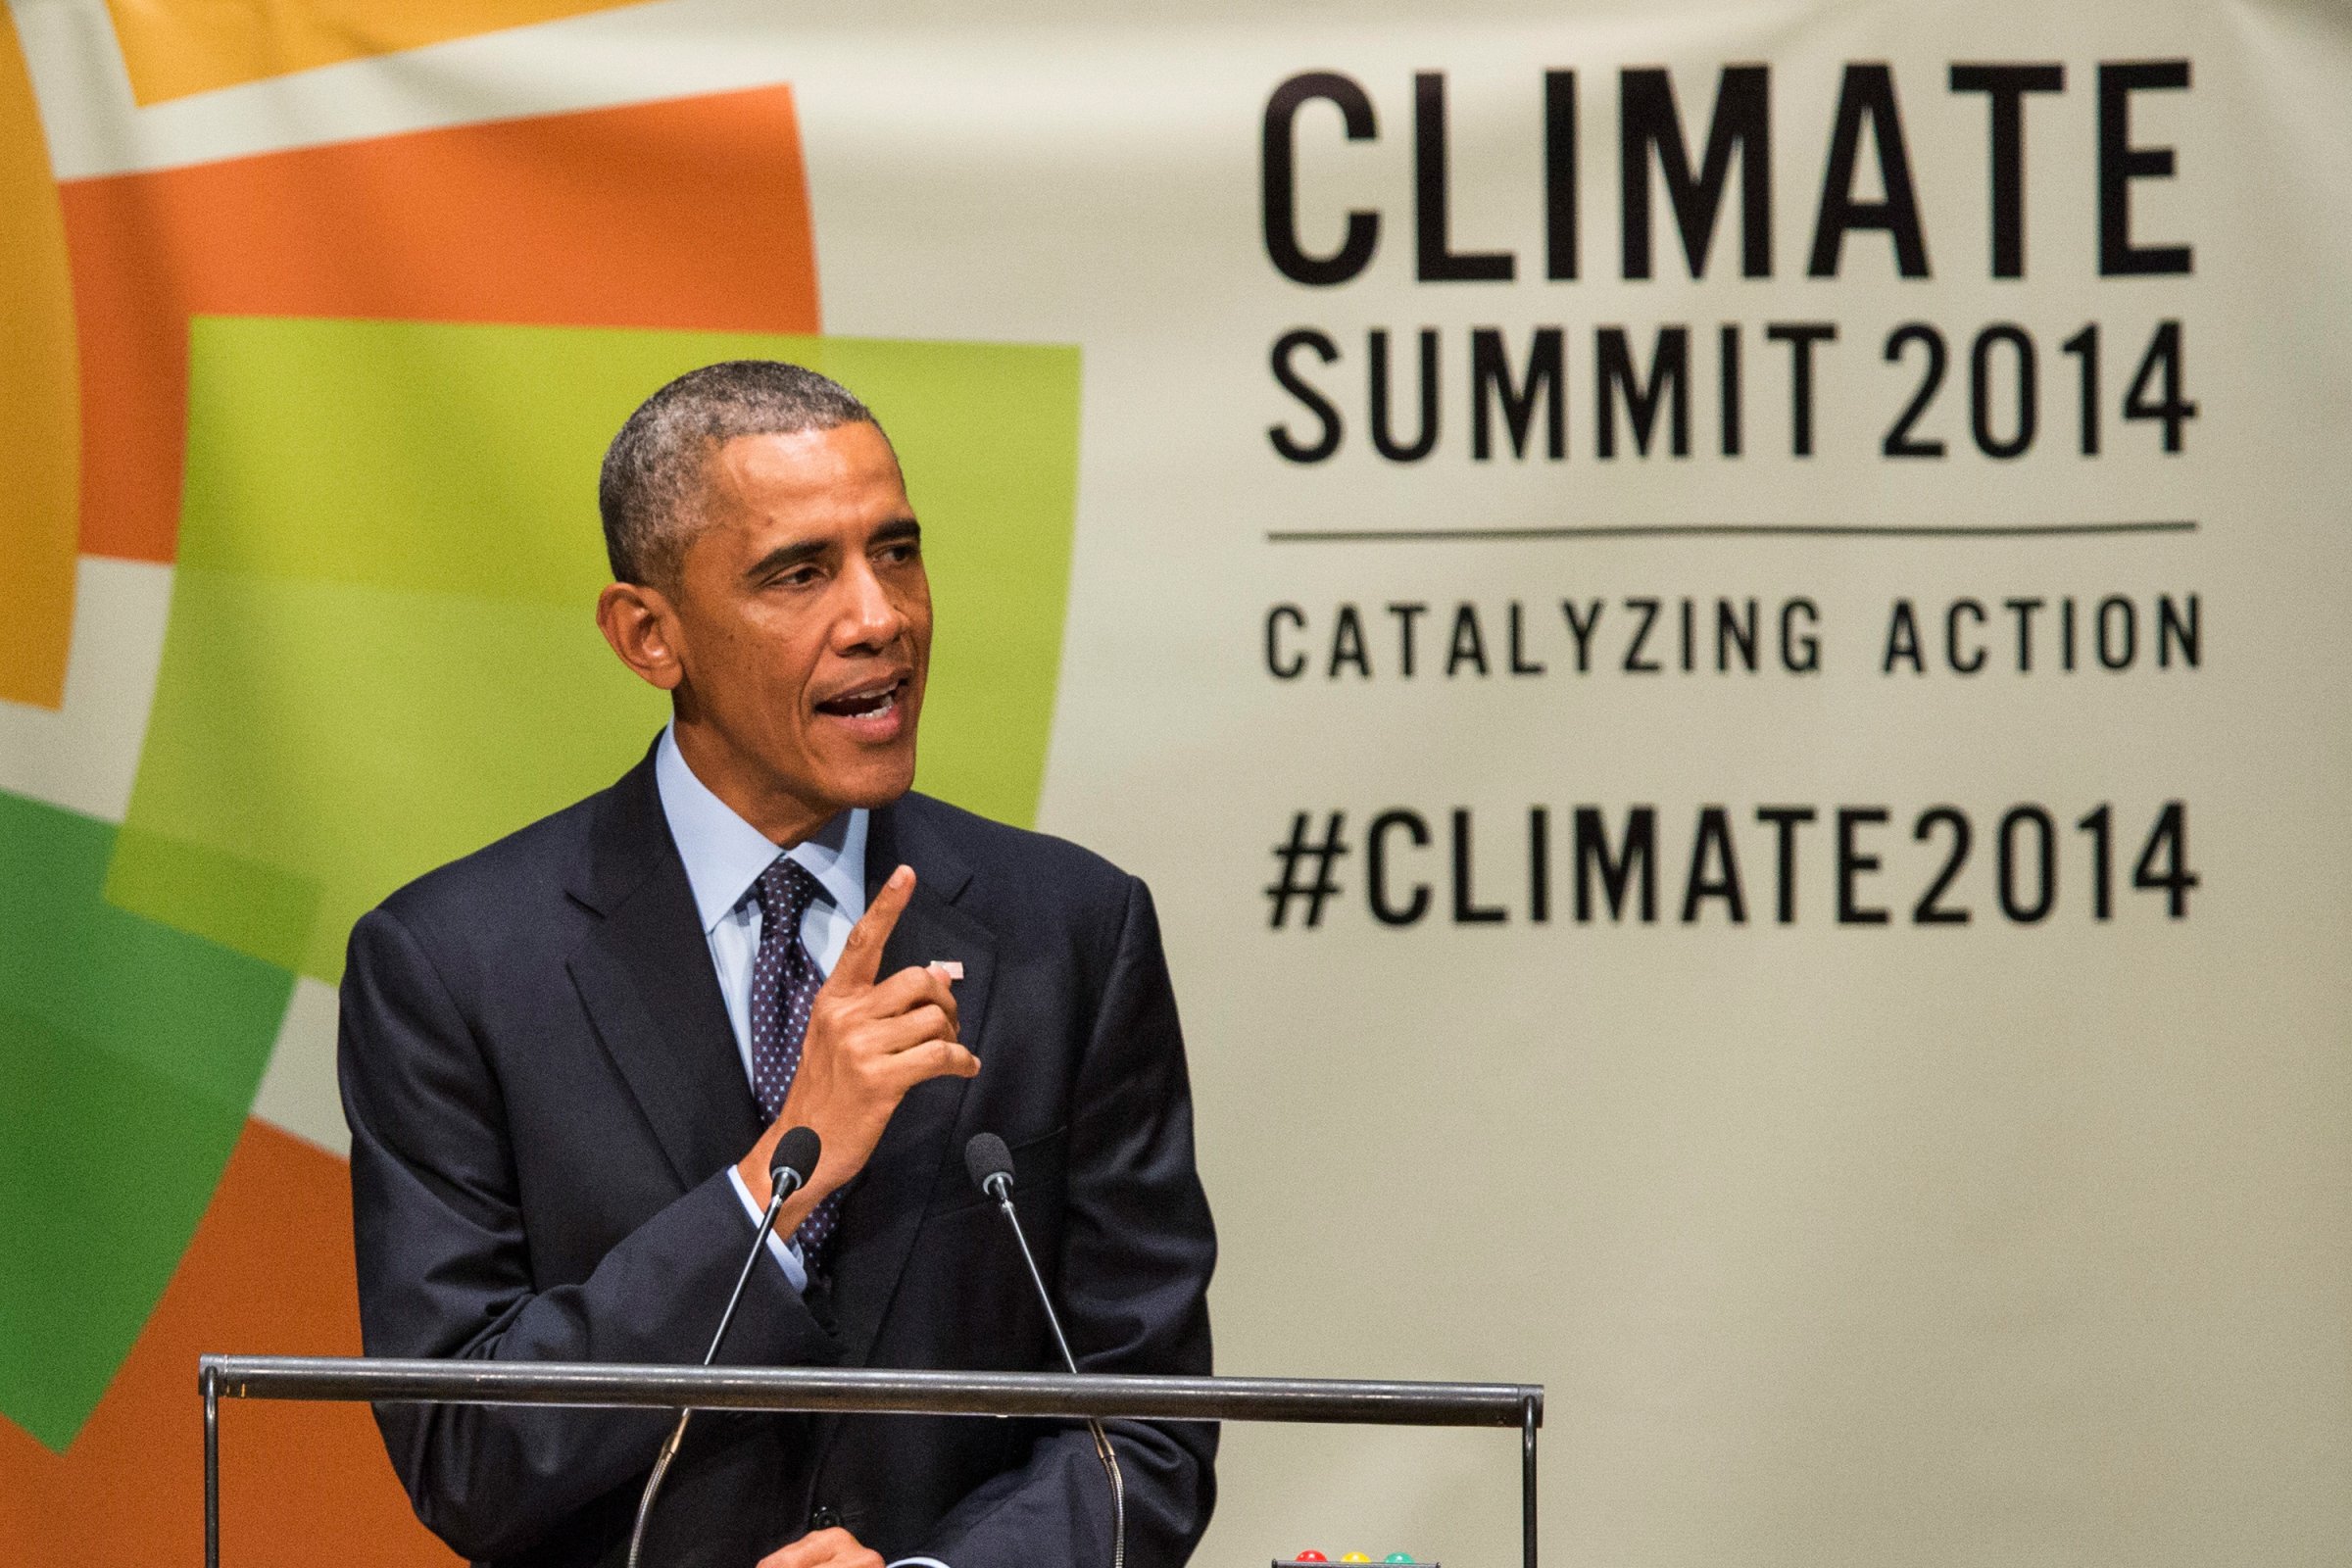 World Leaders Speak At UN Climate Summit